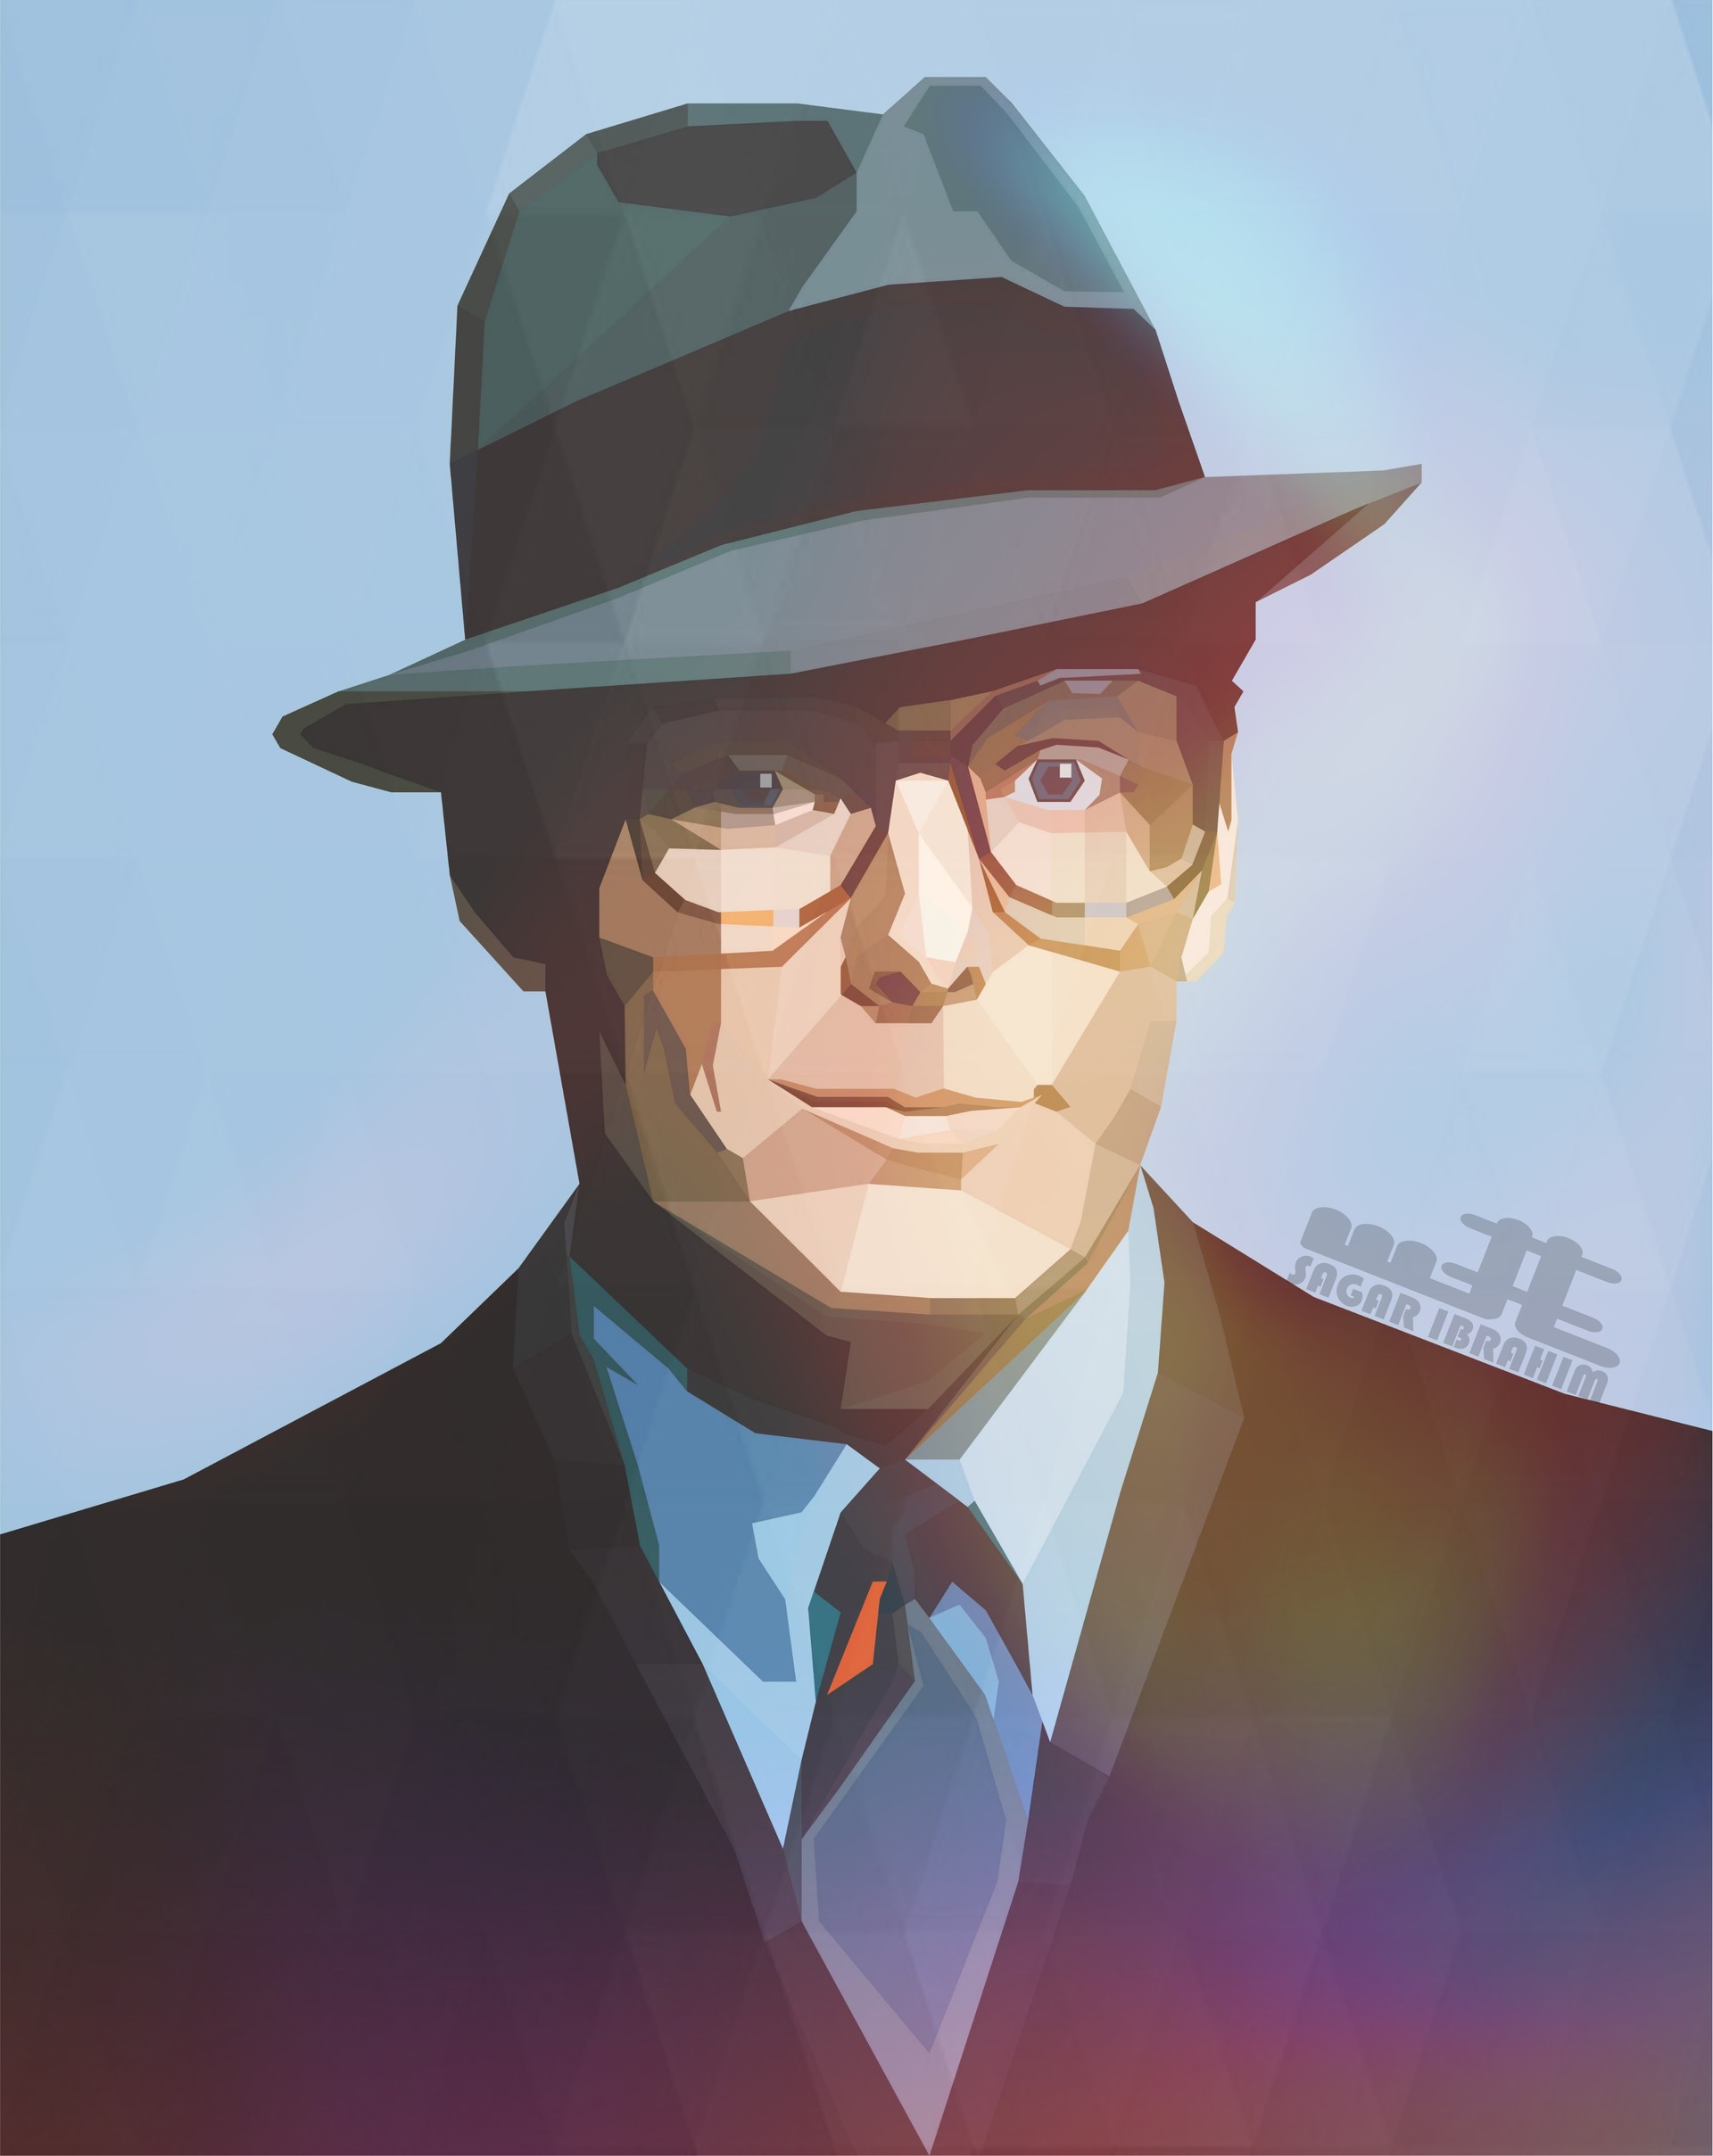 Christopher Reeve As Clark Kent